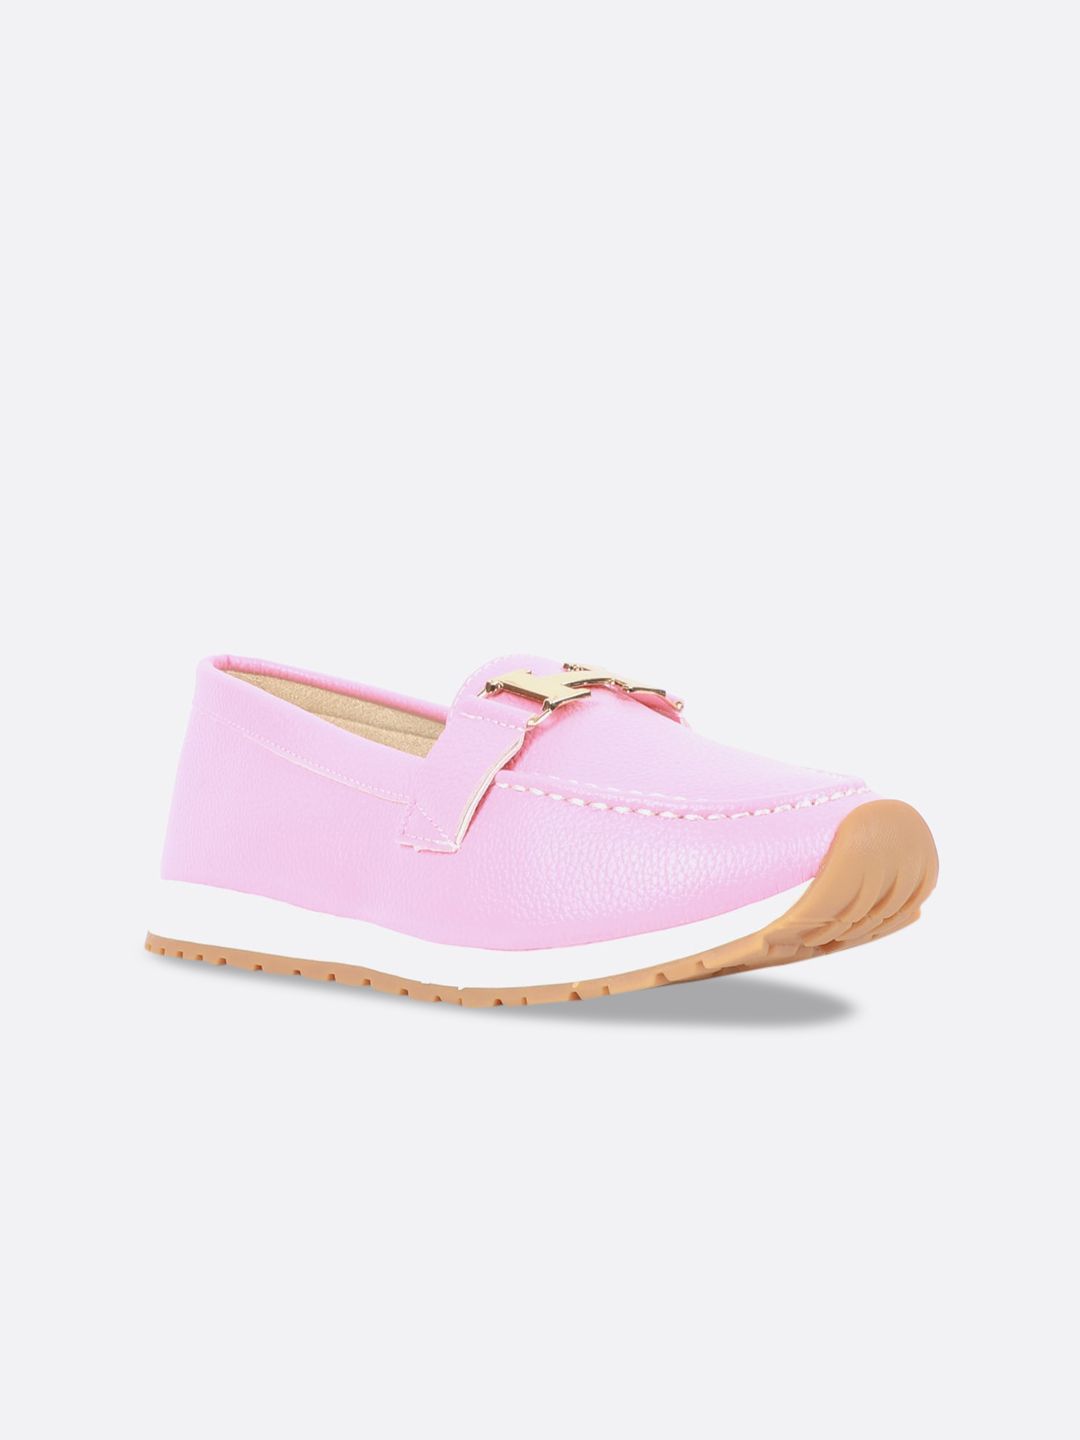 Carlton London Women Pink Loafers Price in India